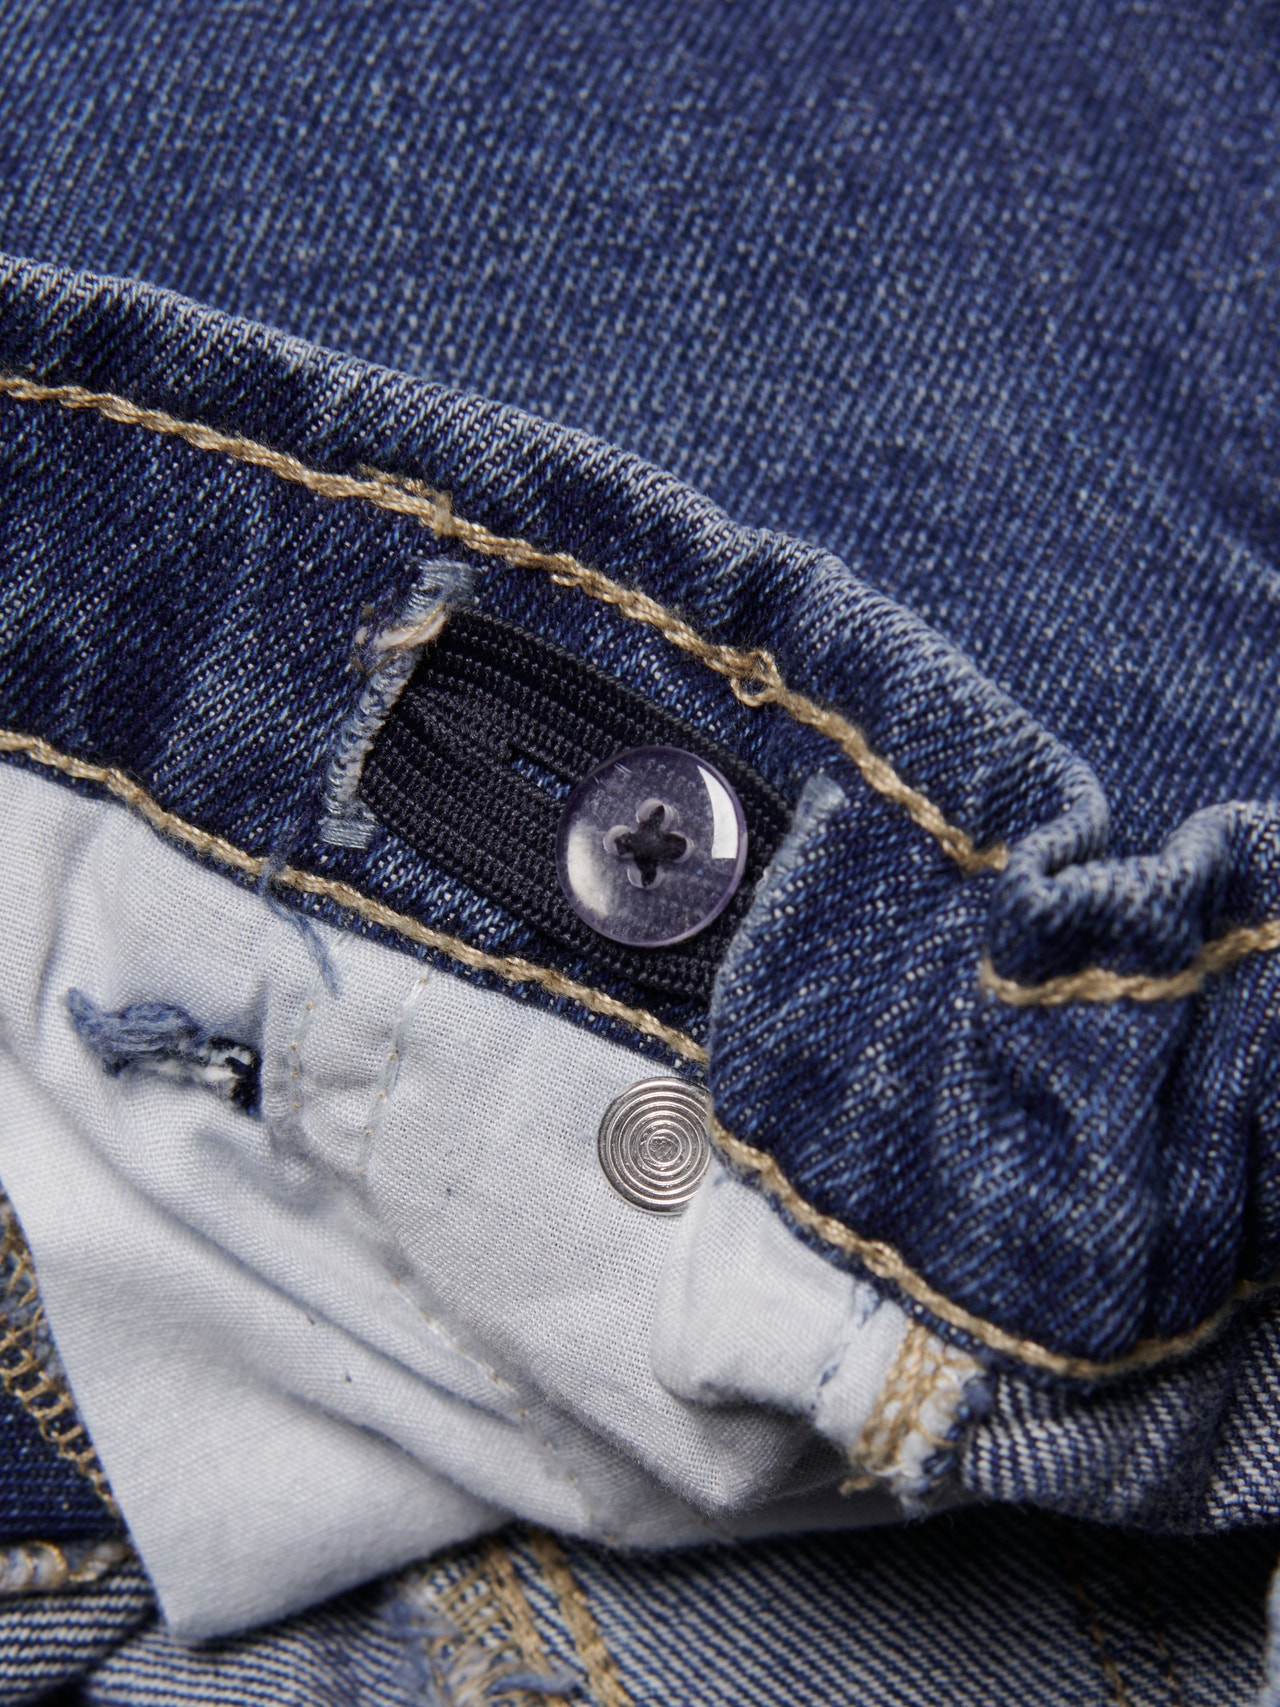 ONLY Flared Fit Jeans -Medium Blue Denim - 15278239